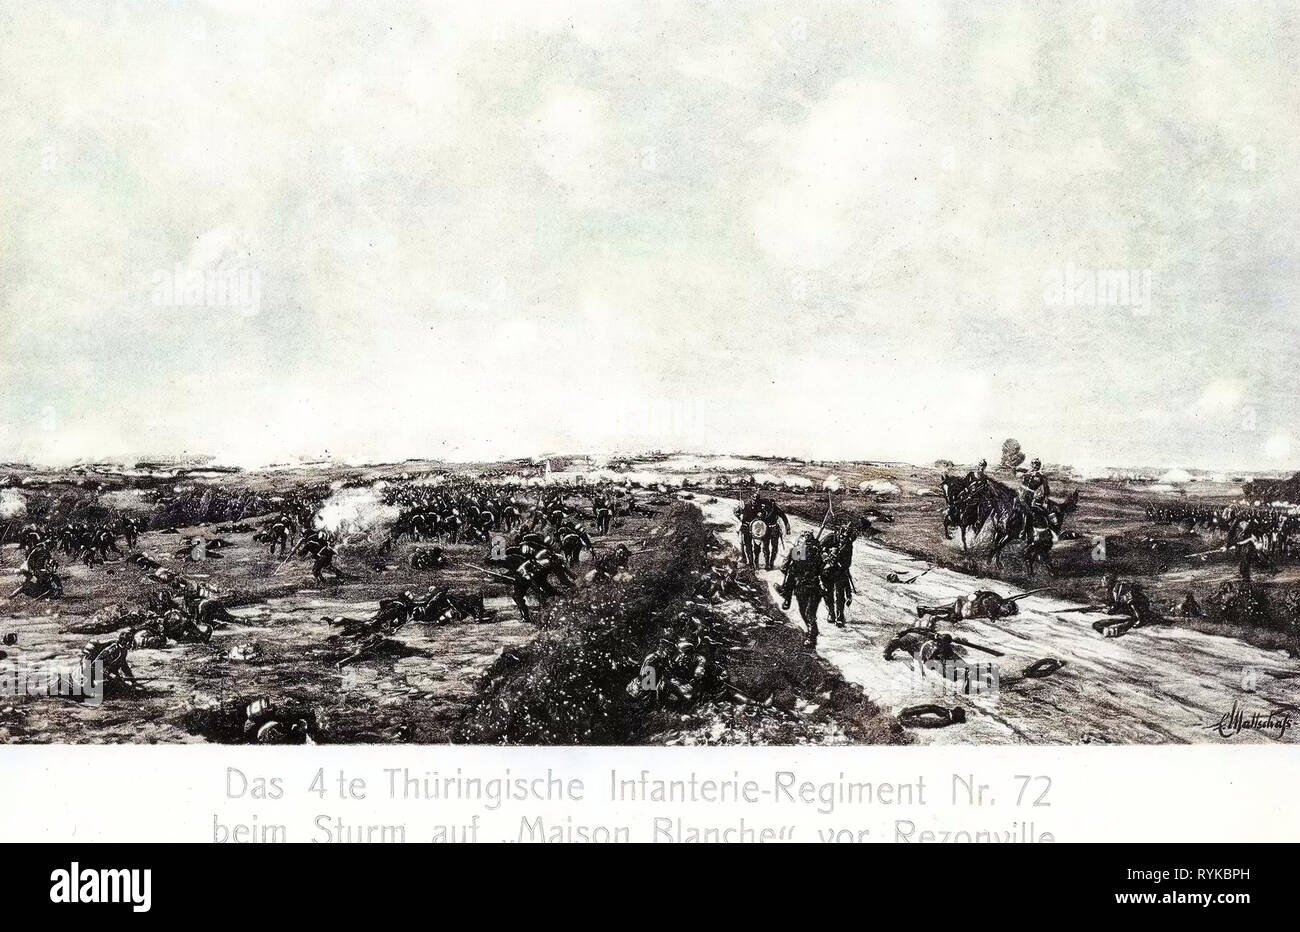 1870 en Francia, la batalla de Mars-la-Tour, 4. Thüringisches Infanterie-Regiment Nr. 72, pinturas en Sajonia, en Torgau, 1912, Schlachtenbild Sturm vor Rezonville Frankreich 1870, Alemania Foto de stock